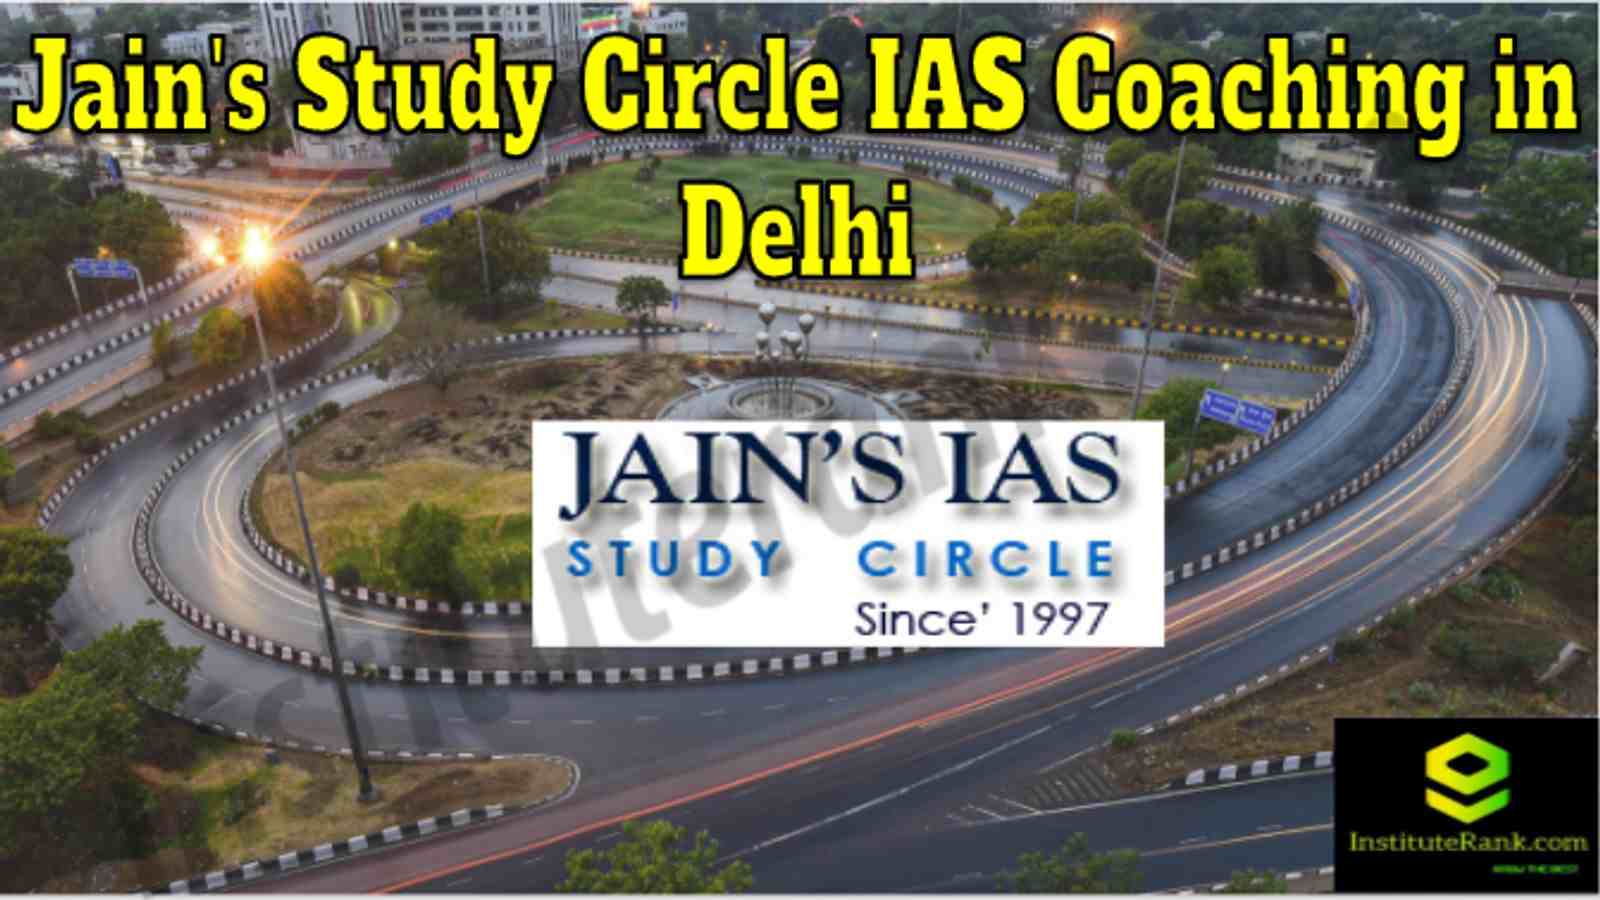 Jain's Study Circle IAS in Delhi